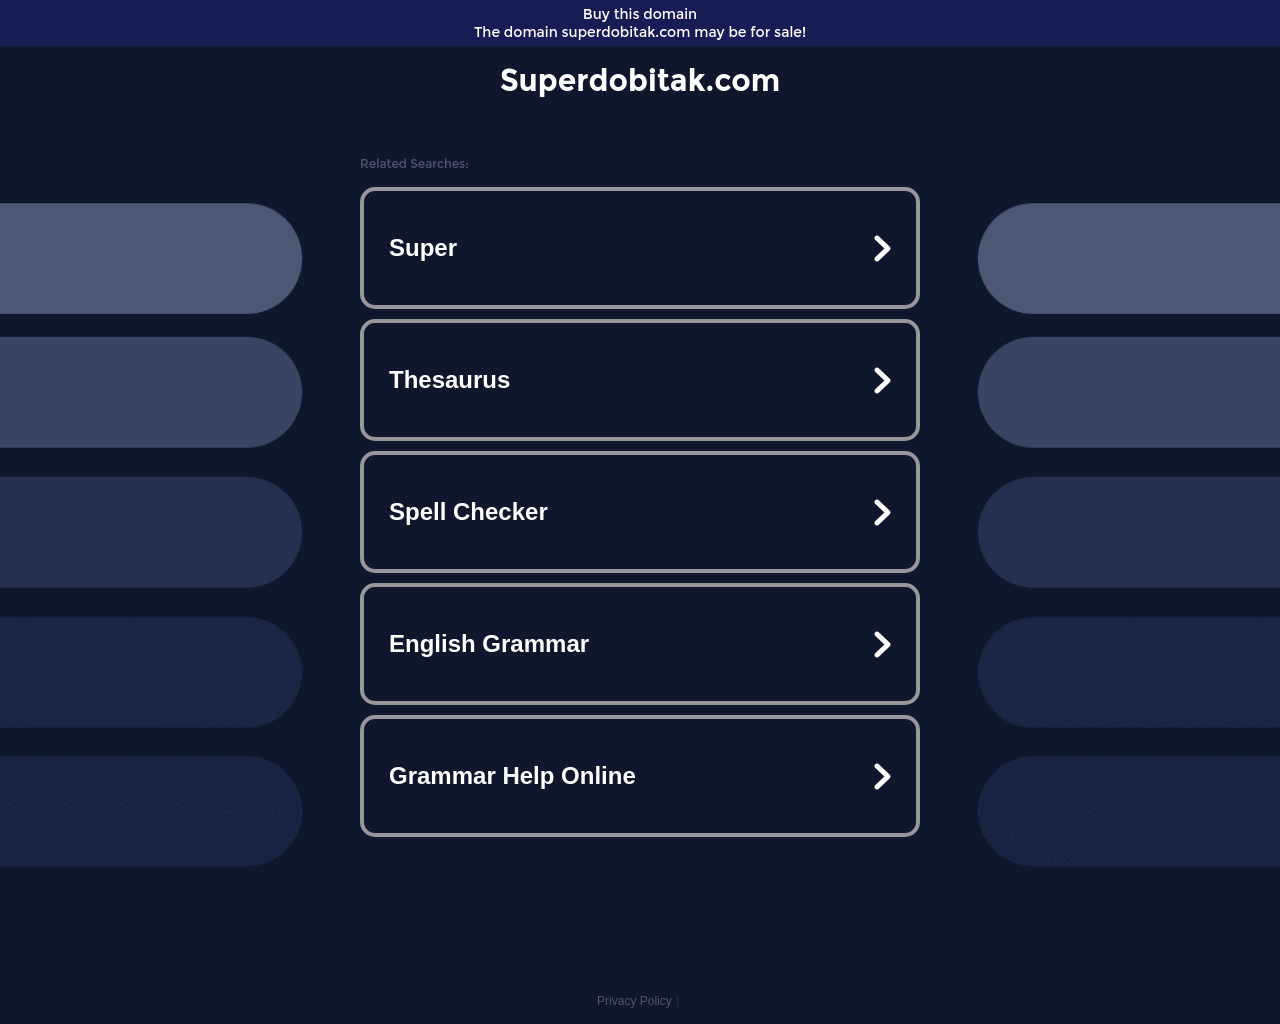 superdobitak.com